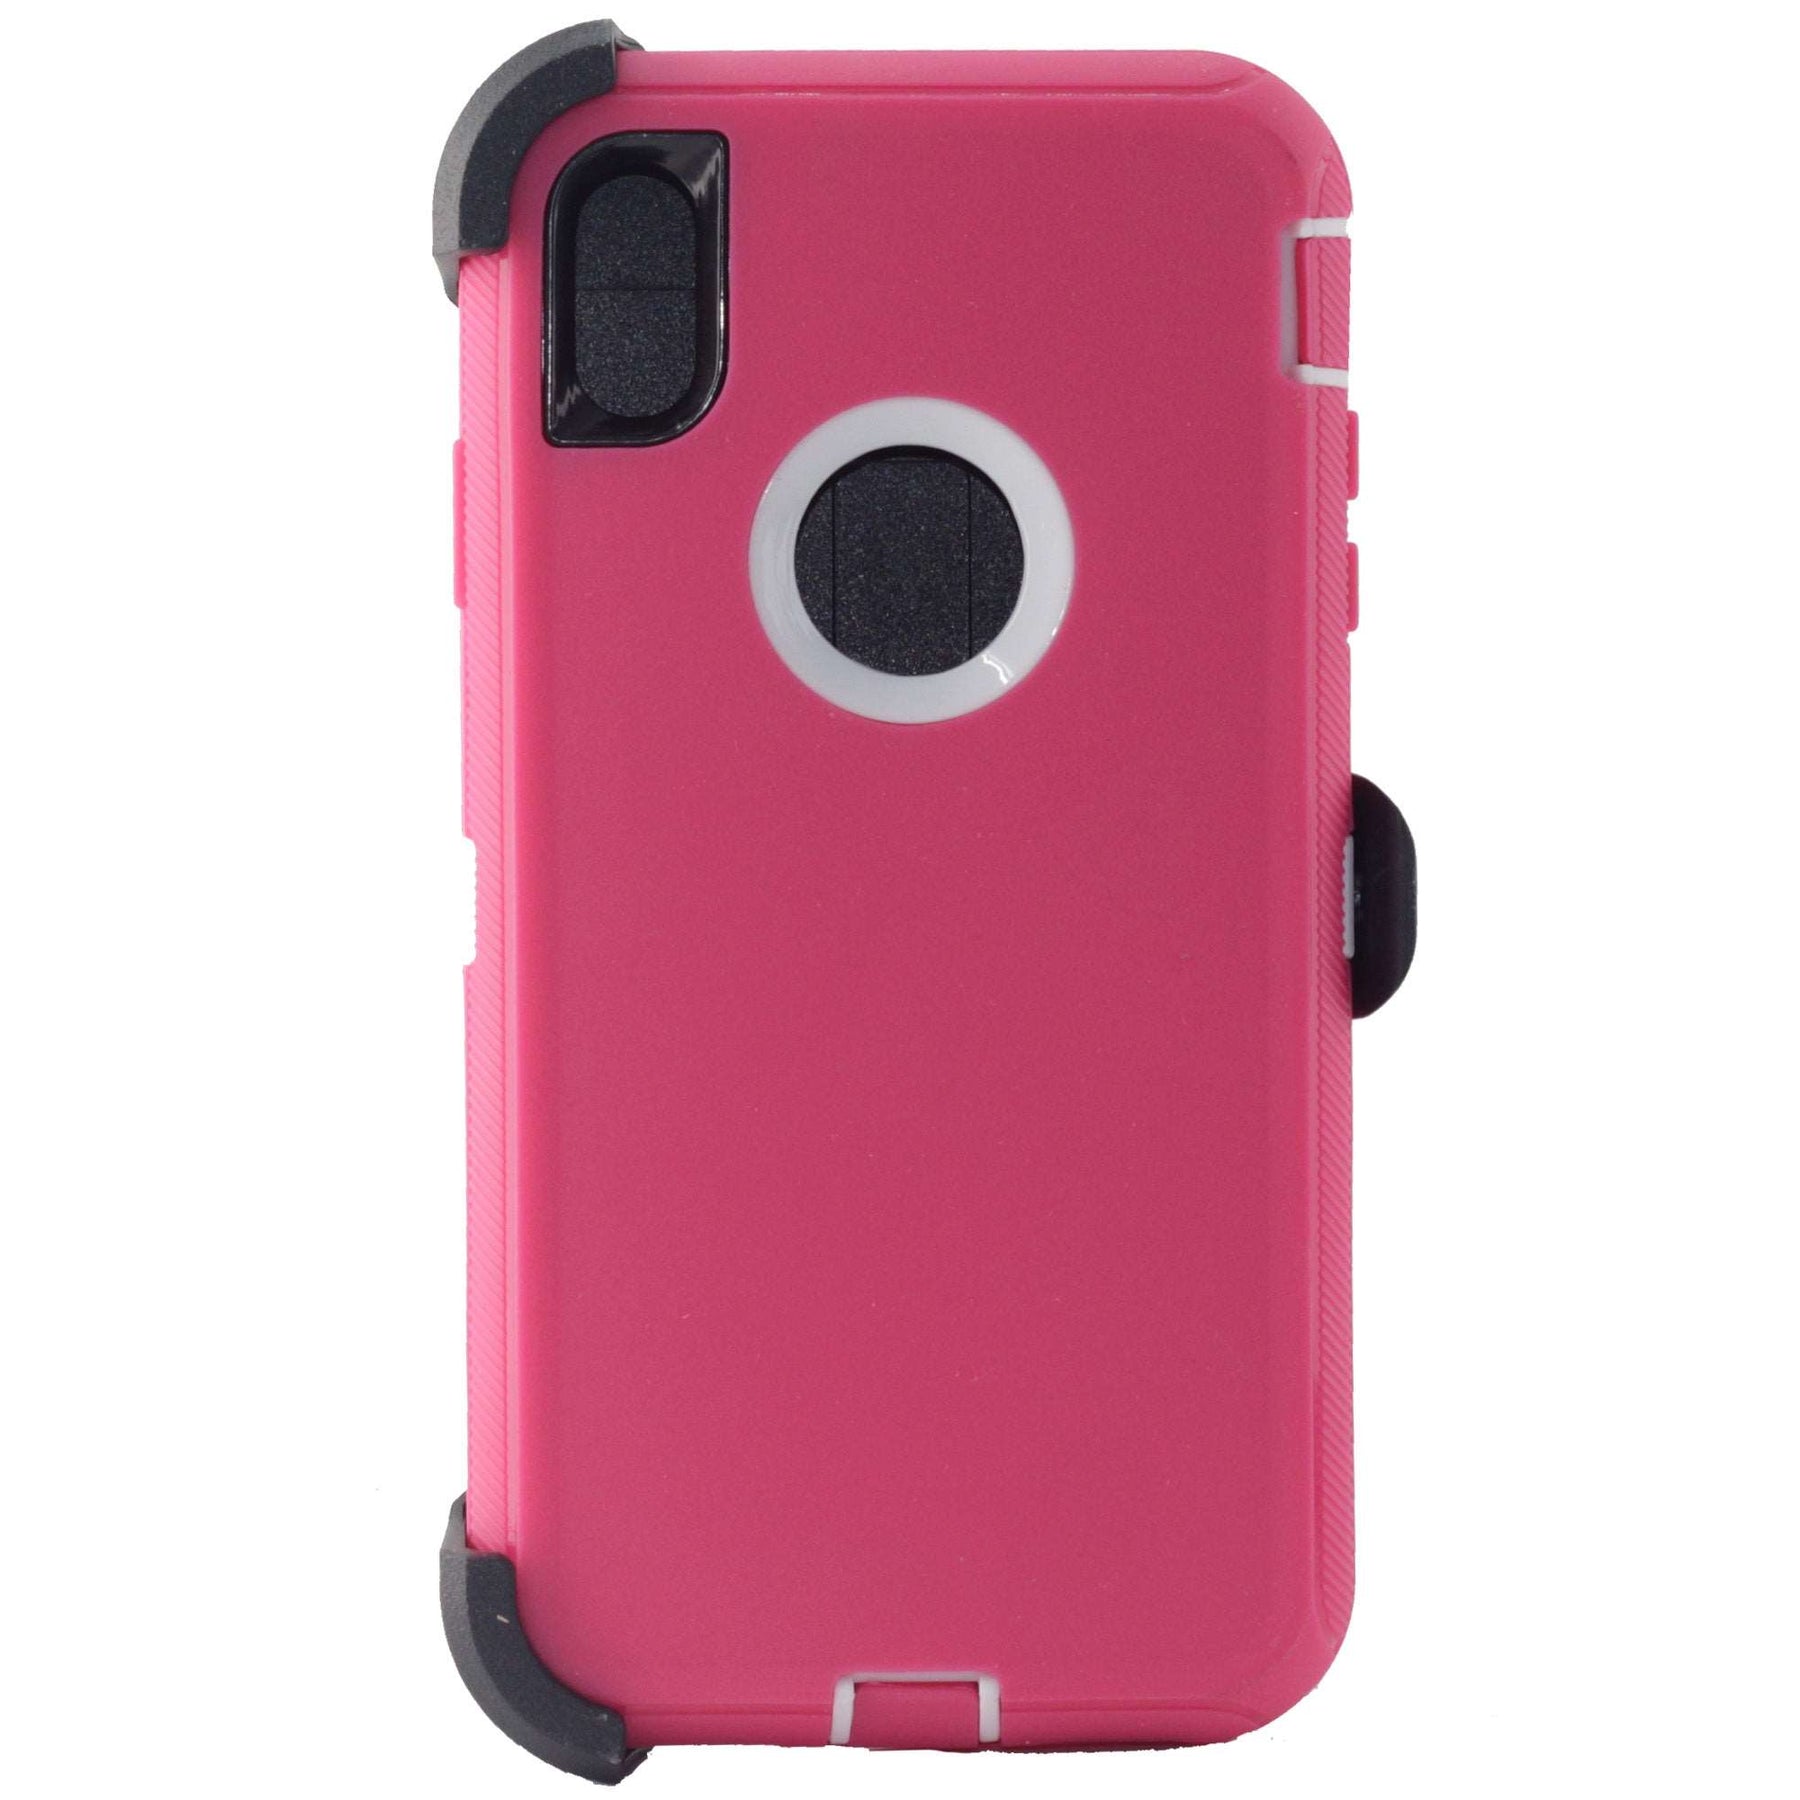 iPhone XS Max pink slim case